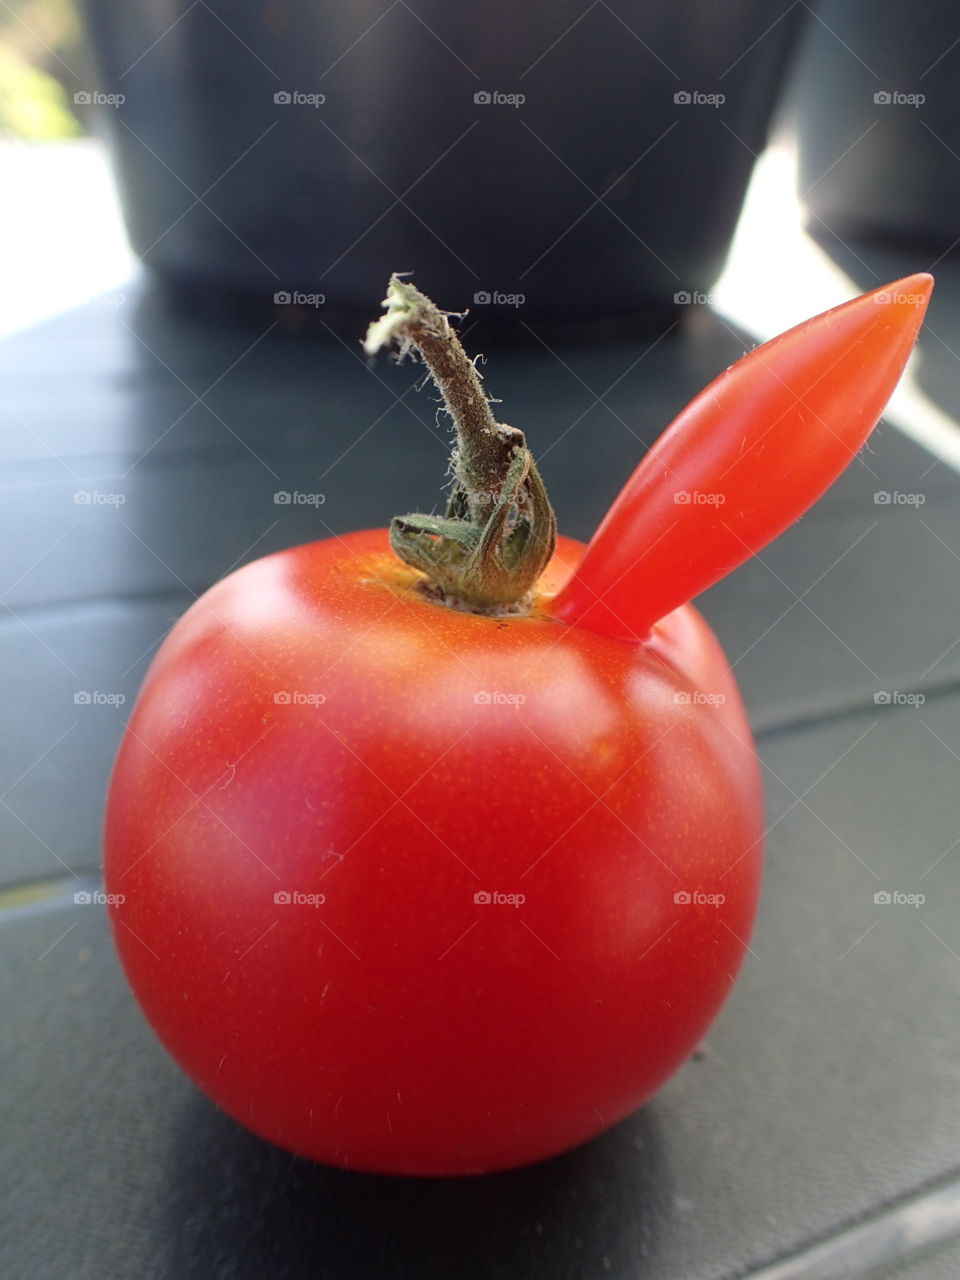 Tomato. From my garden 